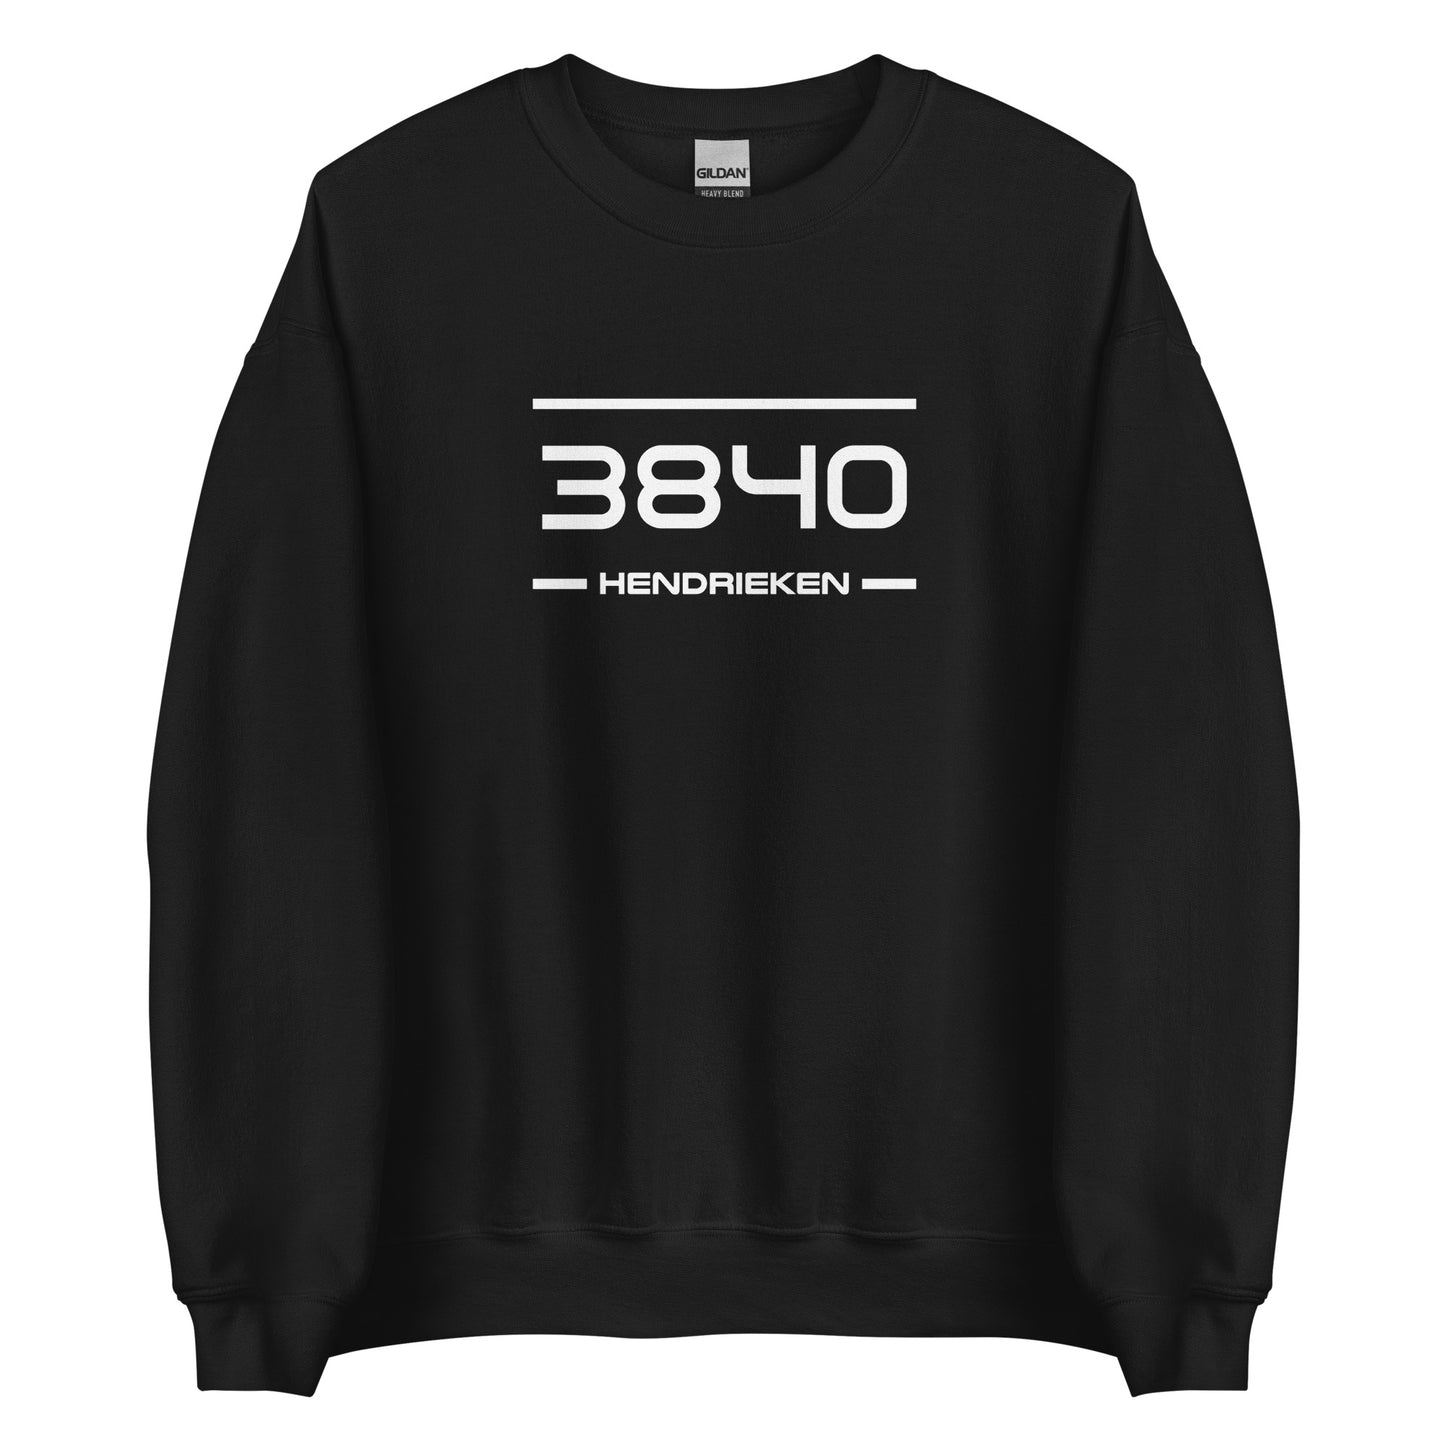 Sweater - 3840 - Hendrieken (M/V)